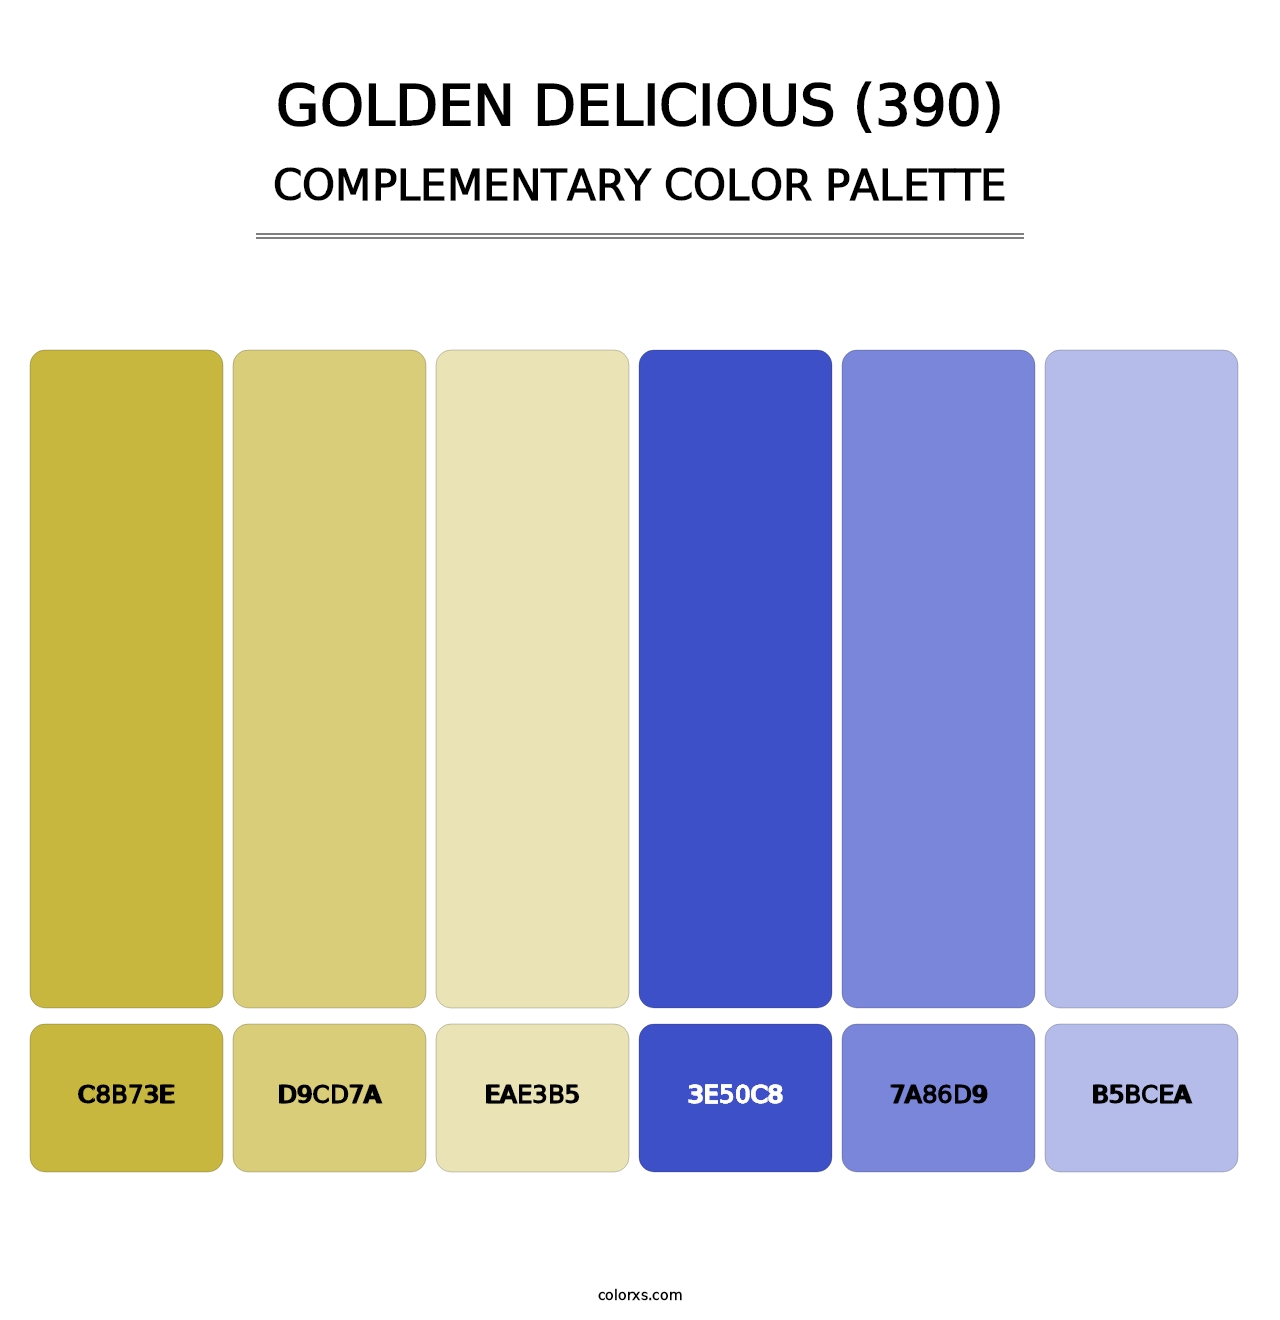 Golden Delicious (390) - Complementary Color Palette